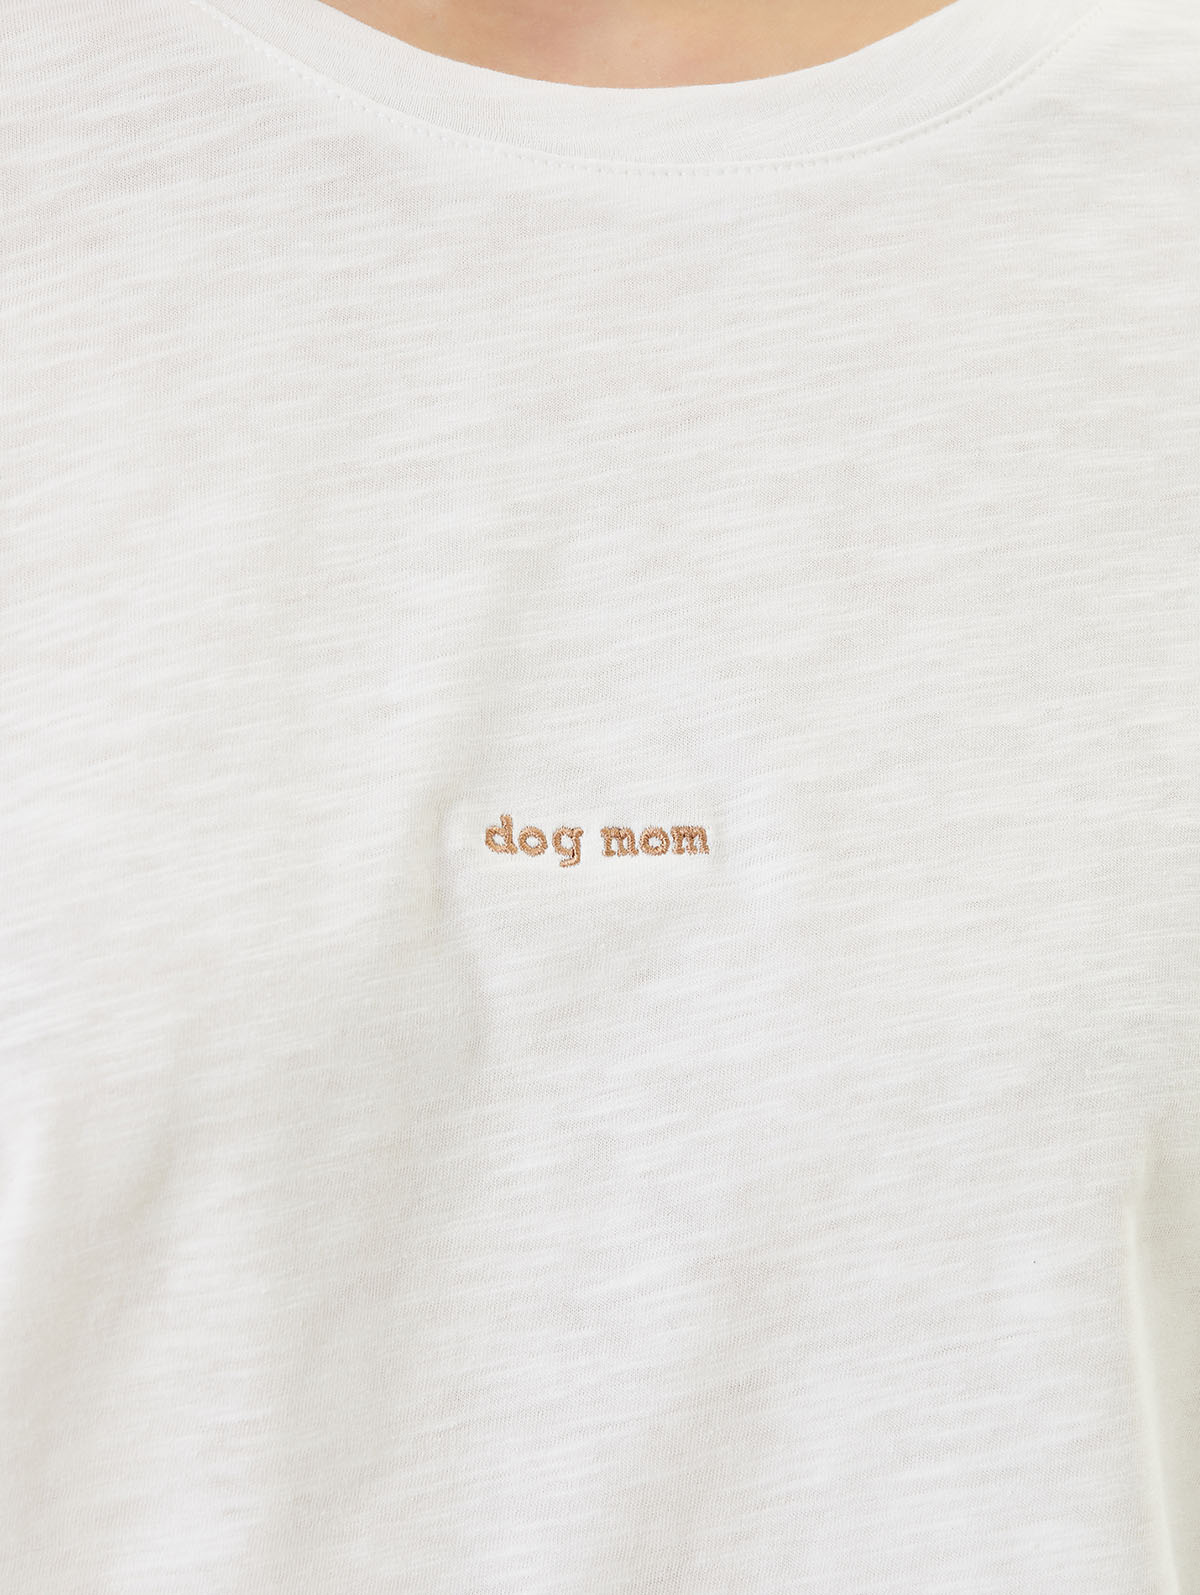 Mons Bons - Dog Mom T-shirt